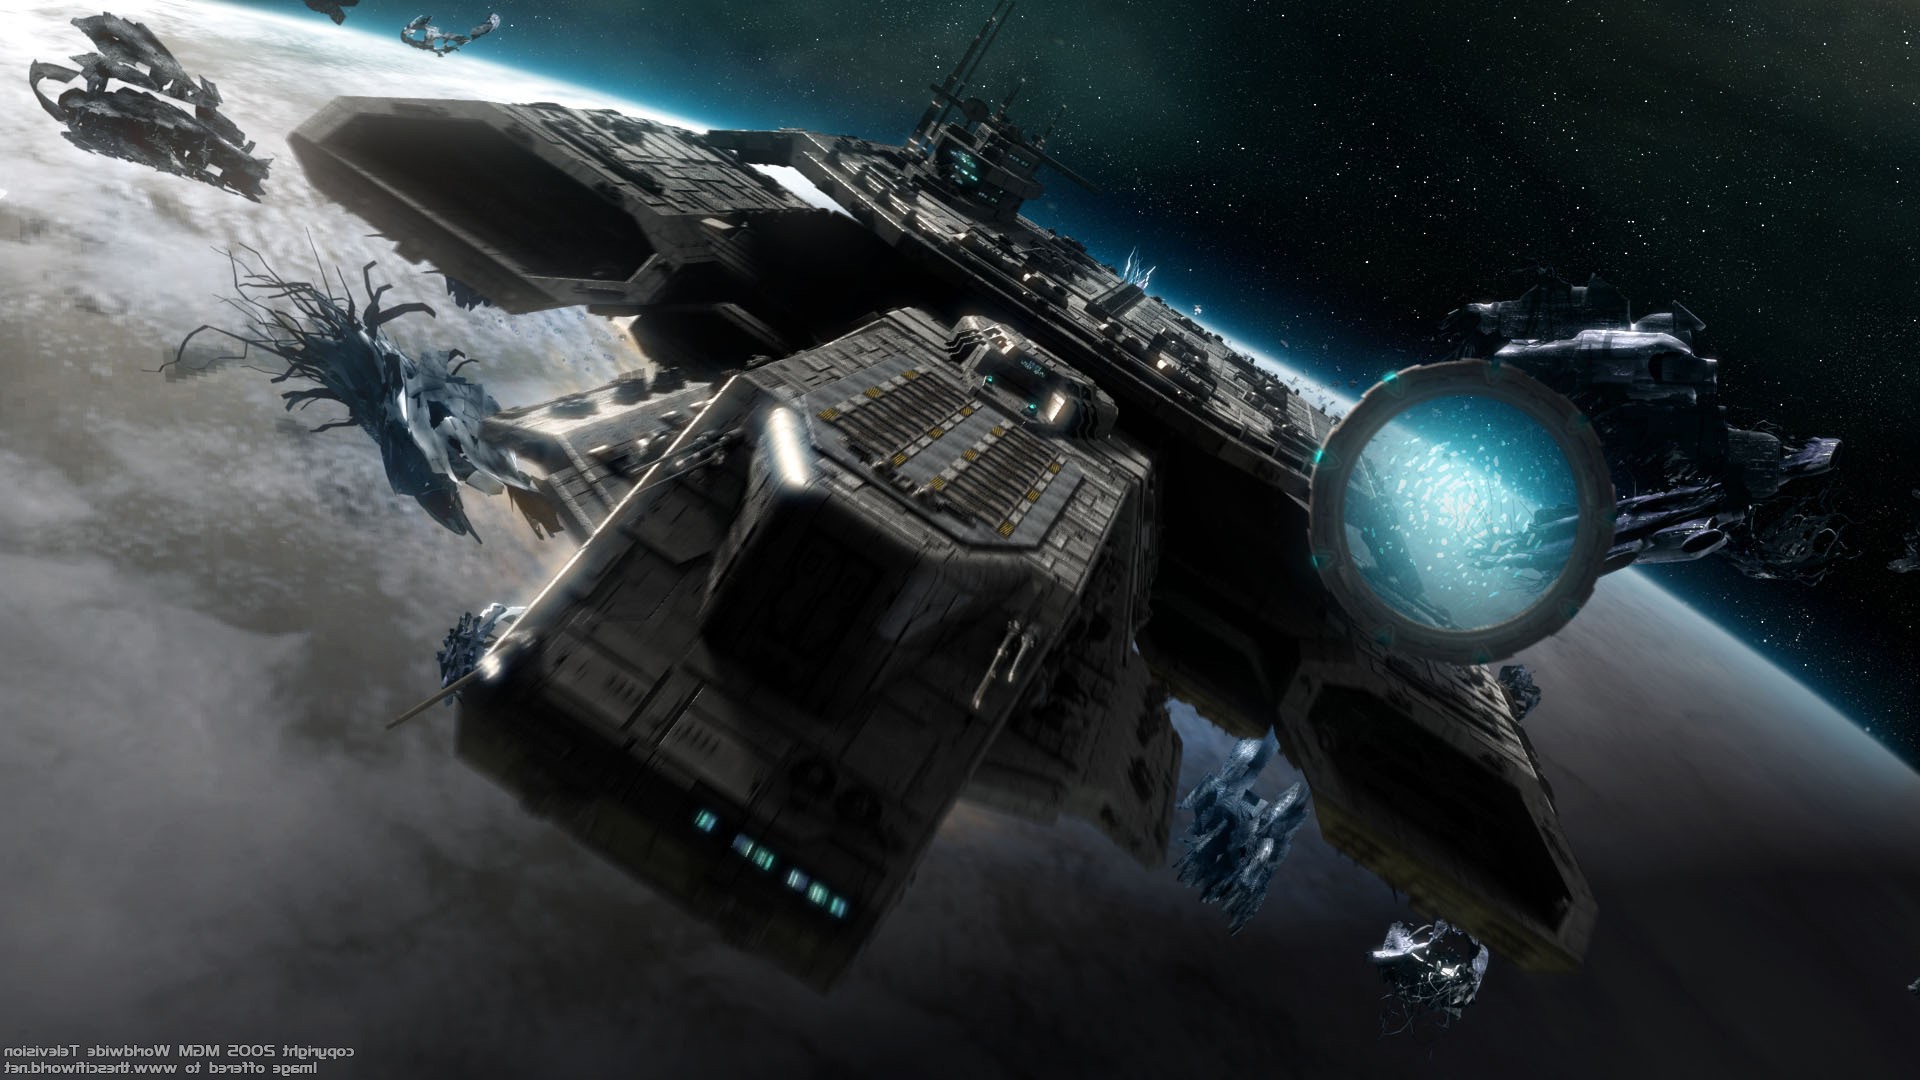 Stargate, Daedalus class, Space Battle, Space Wallpaper